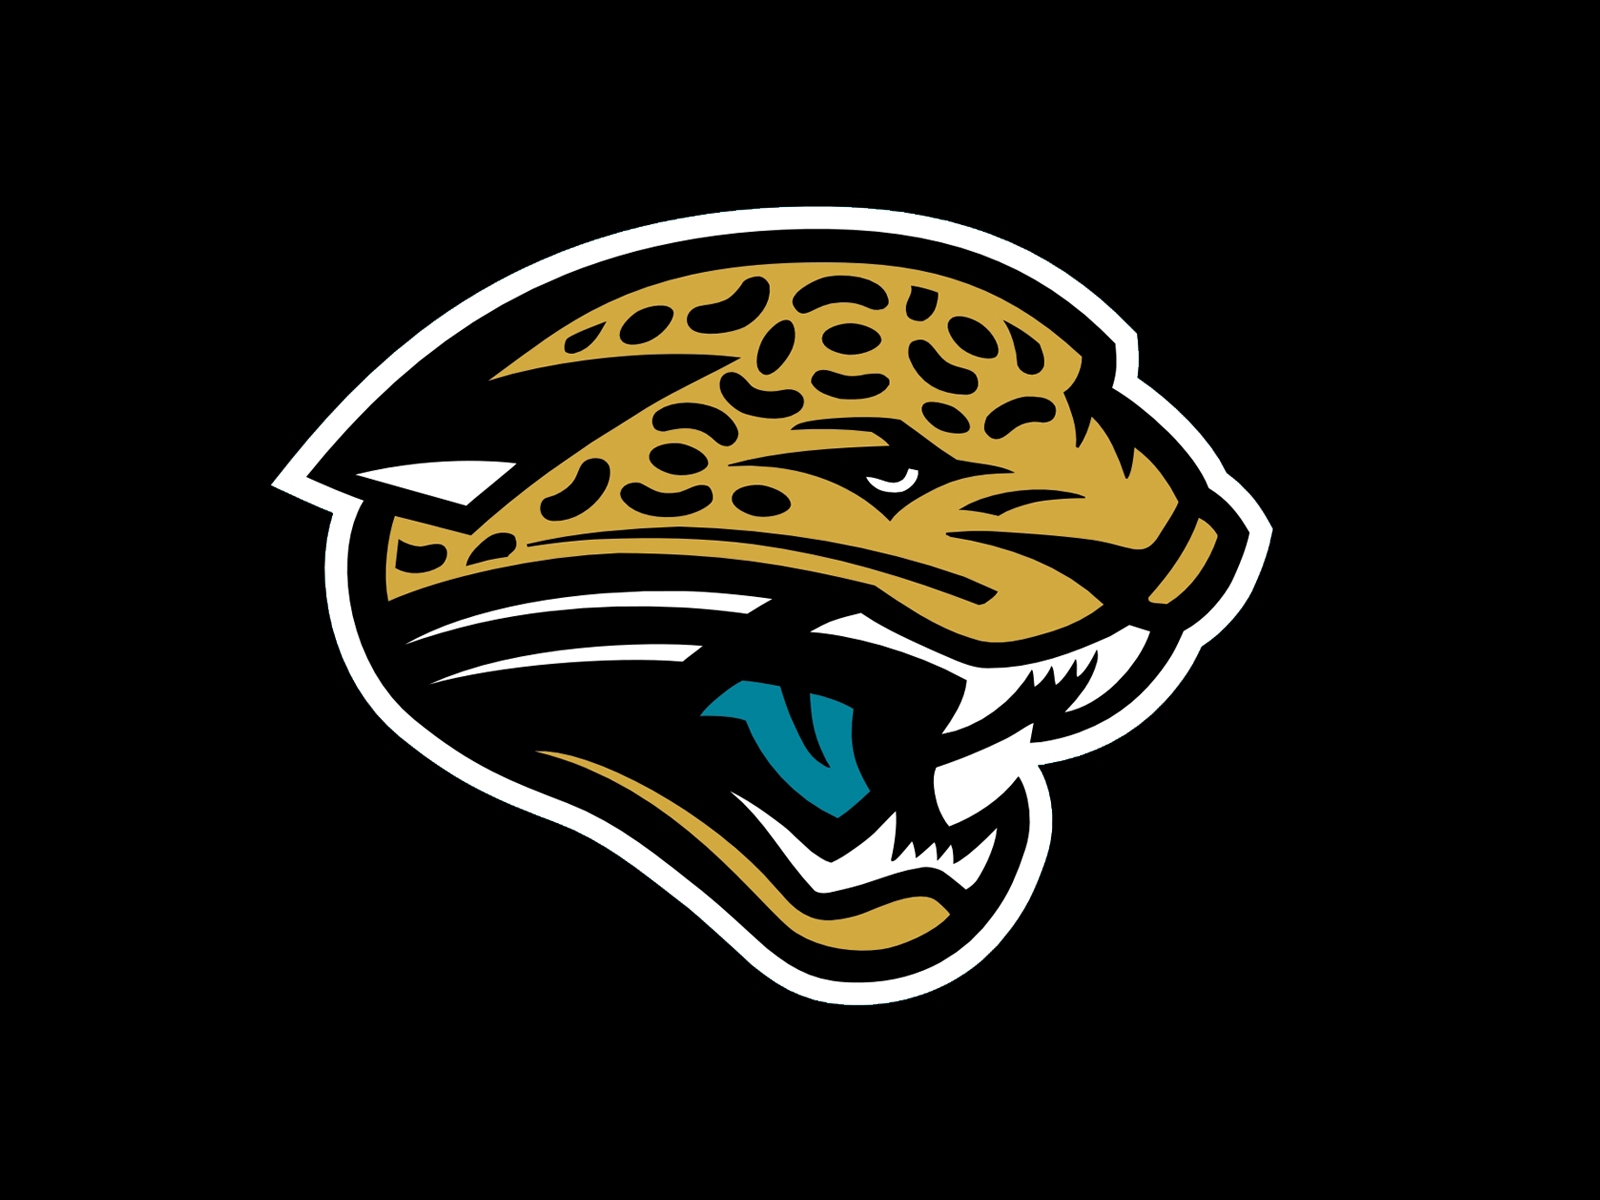 2018 Jacksonville Jaguars Predictions & NFL Football Gambling Odds